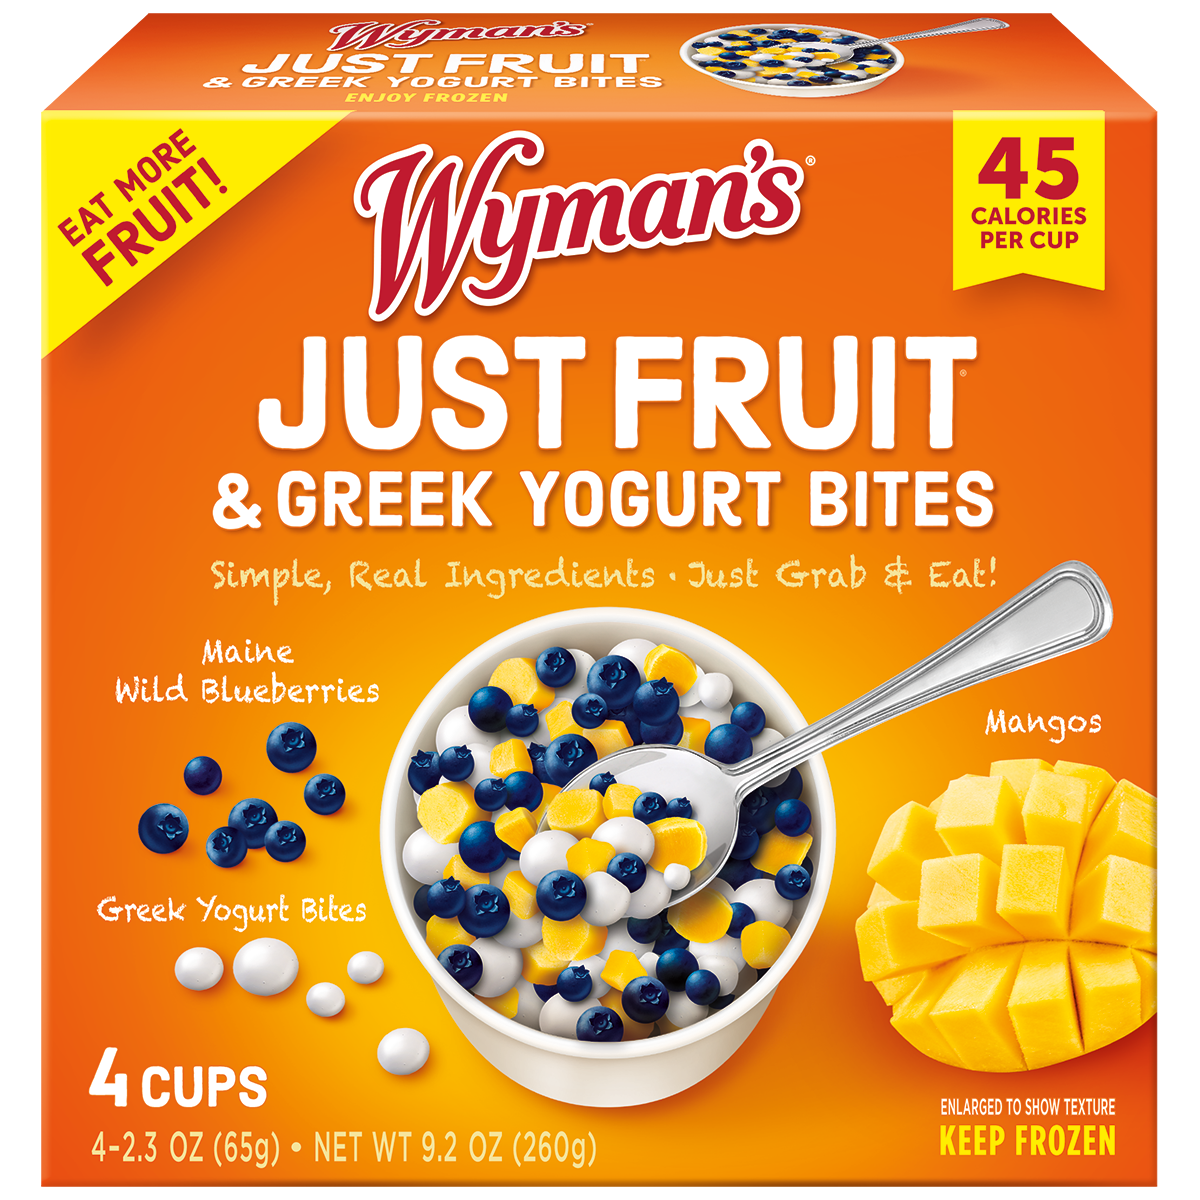 Wyman's Wild Blueberry & Mango Just Fruit & Greek Yogurt Bites